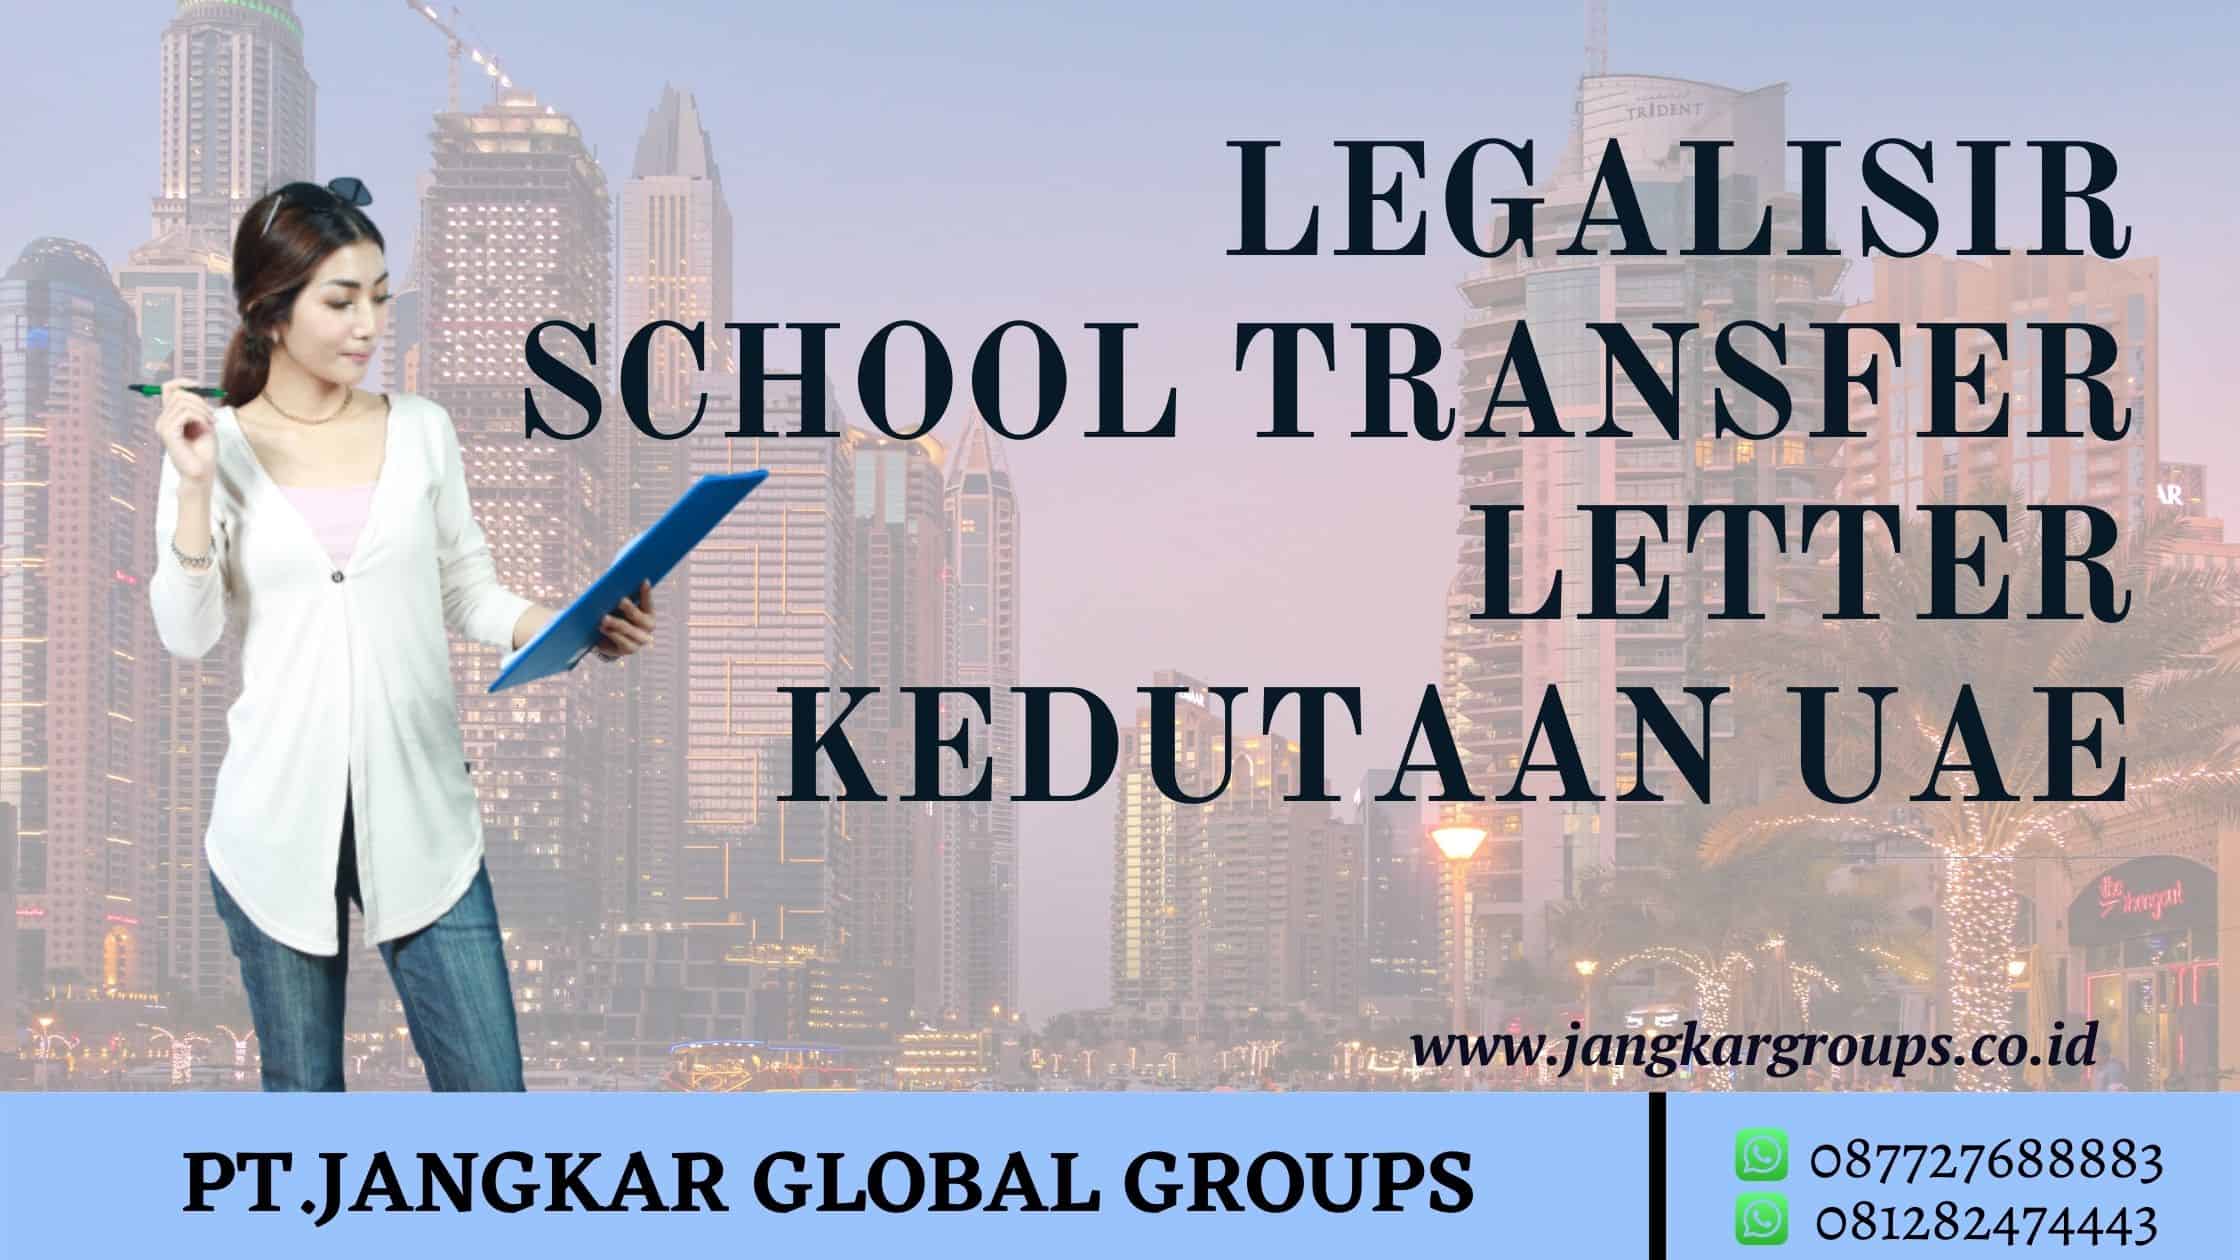 Legalisir school transfer letter kedutaan uae